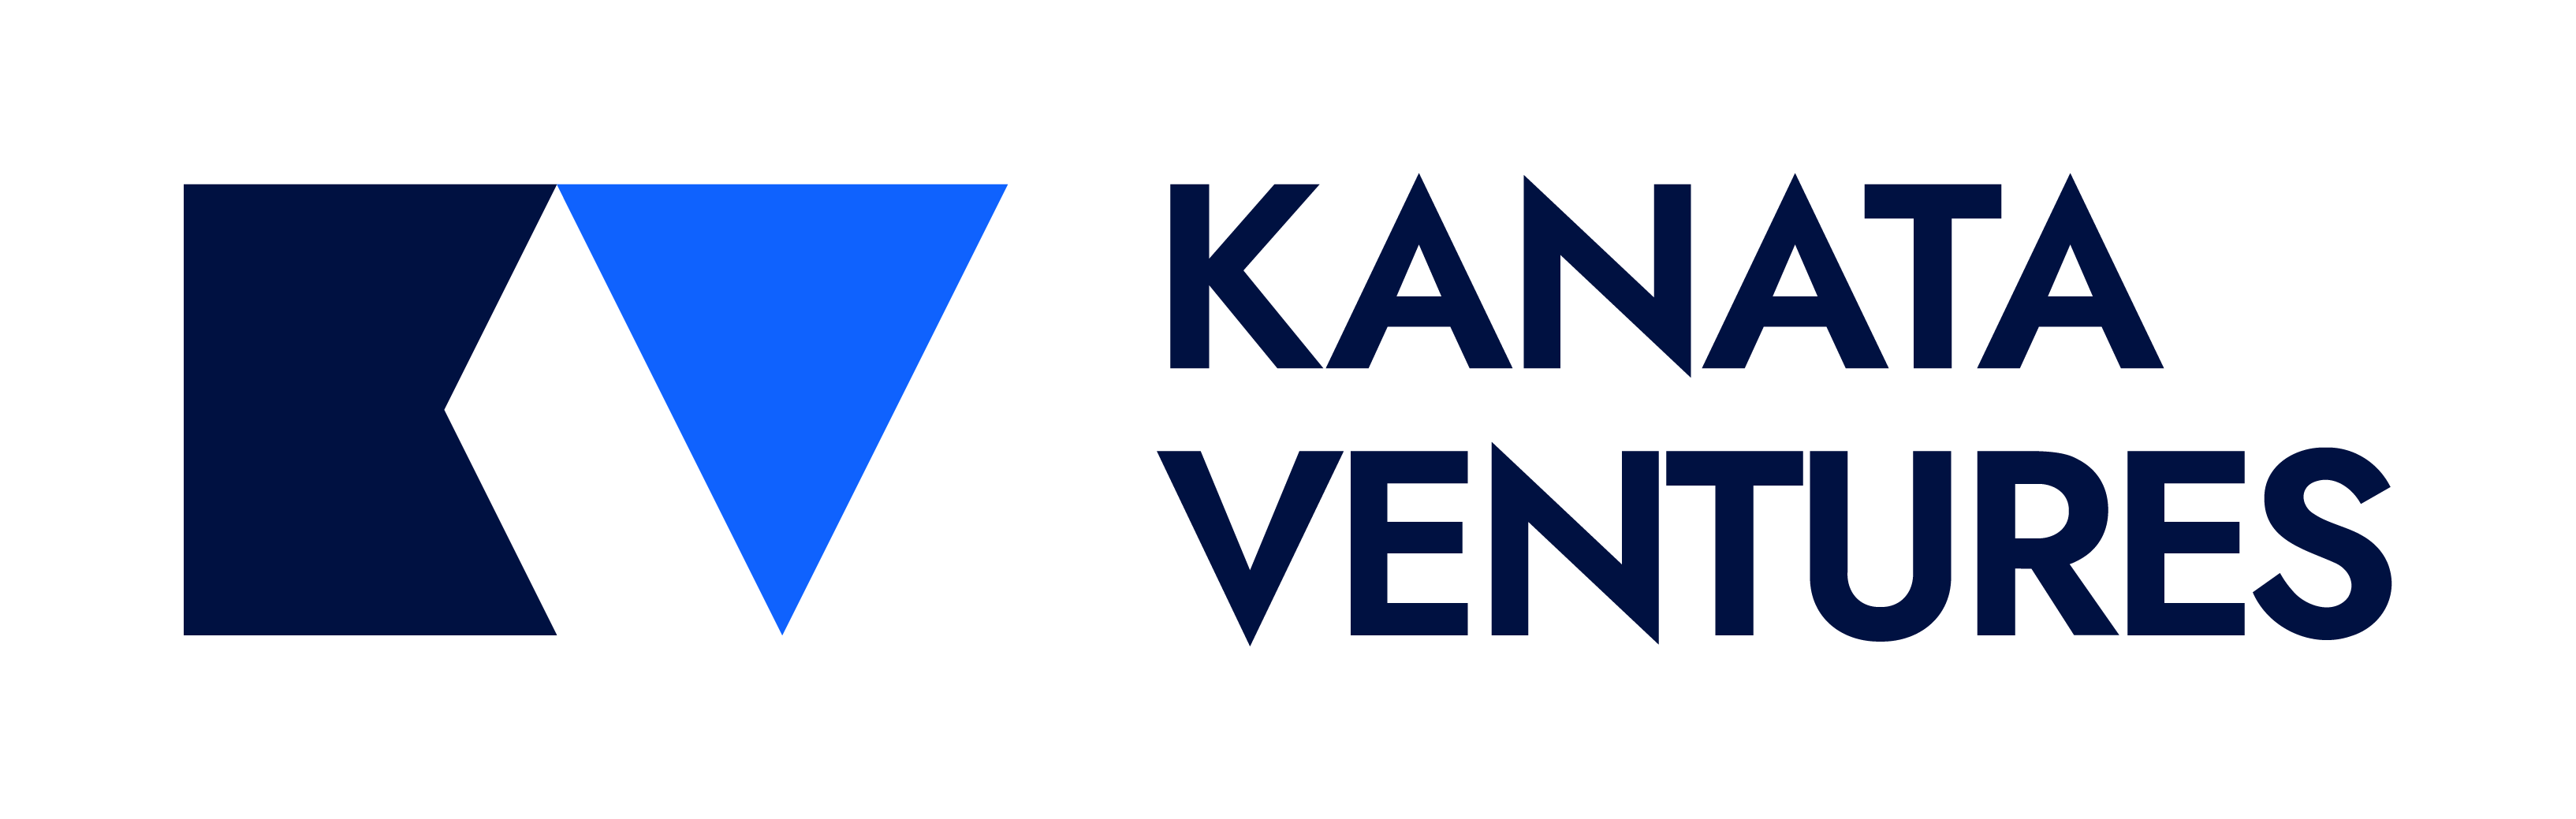 Kanata Ventures-